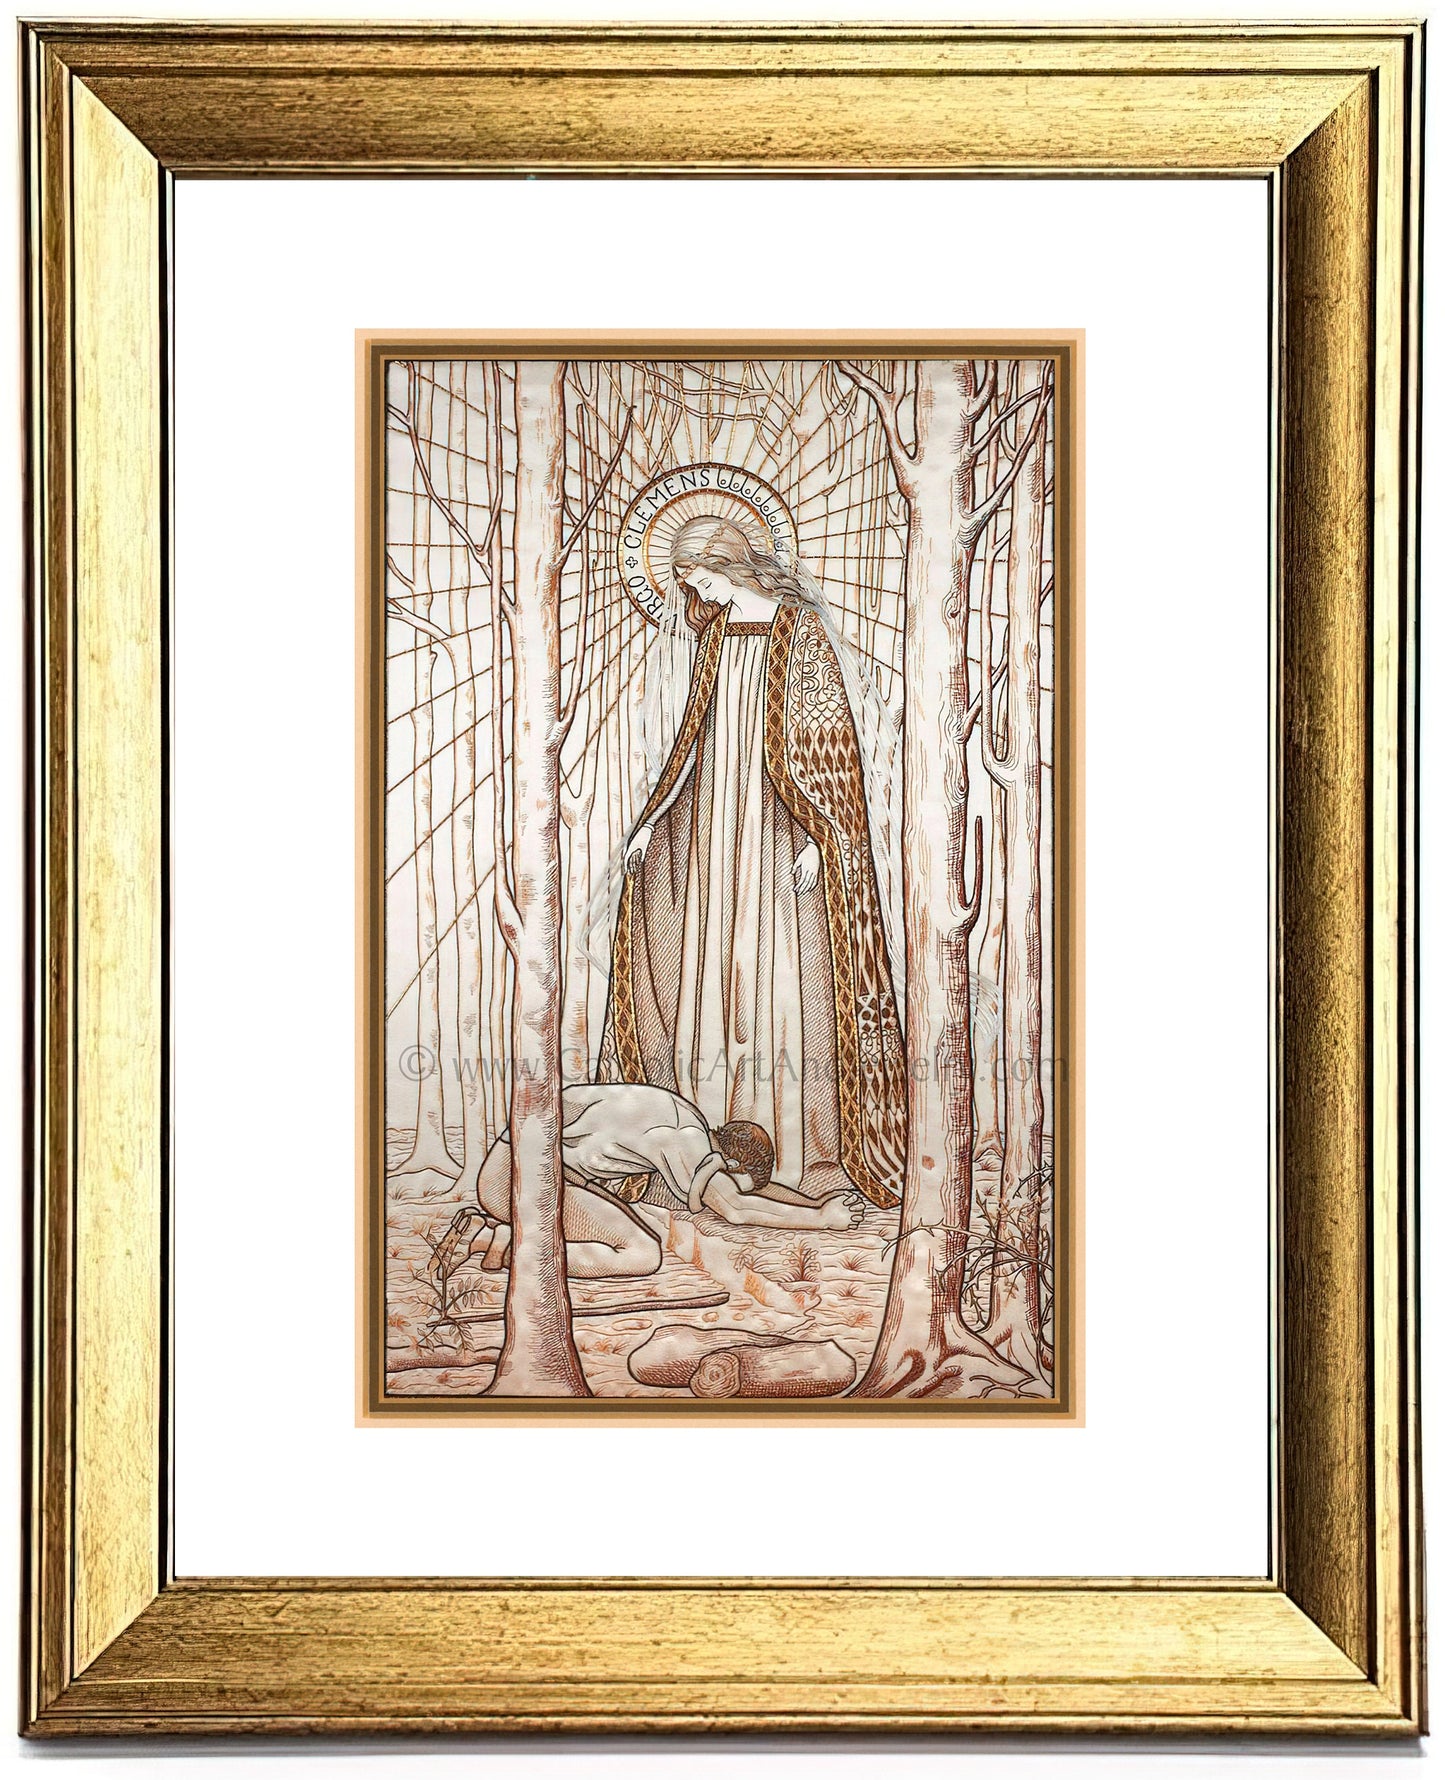 Virgin Most Merciful – Virgo Clemens – Embroidery Print – Vintage Catholic Art Print – Litany of Loreto